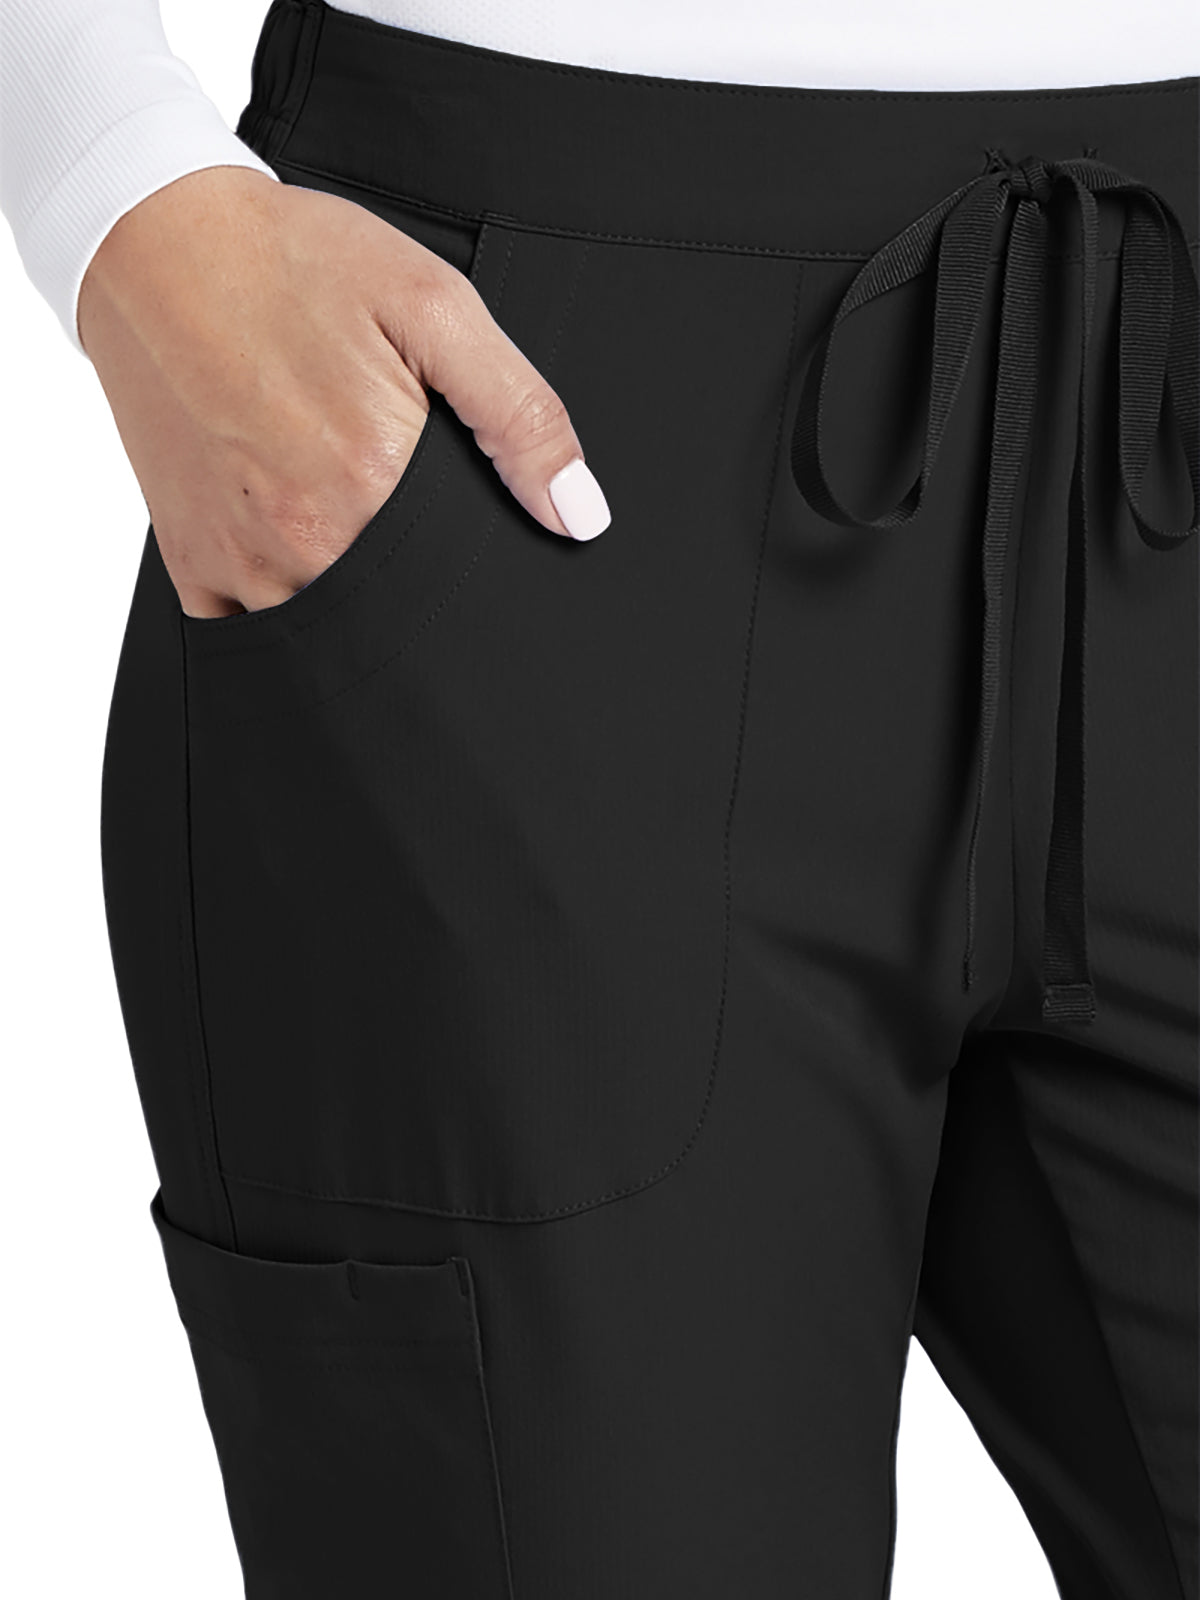 Women's 3-Pocket Pant - SK201 - Black